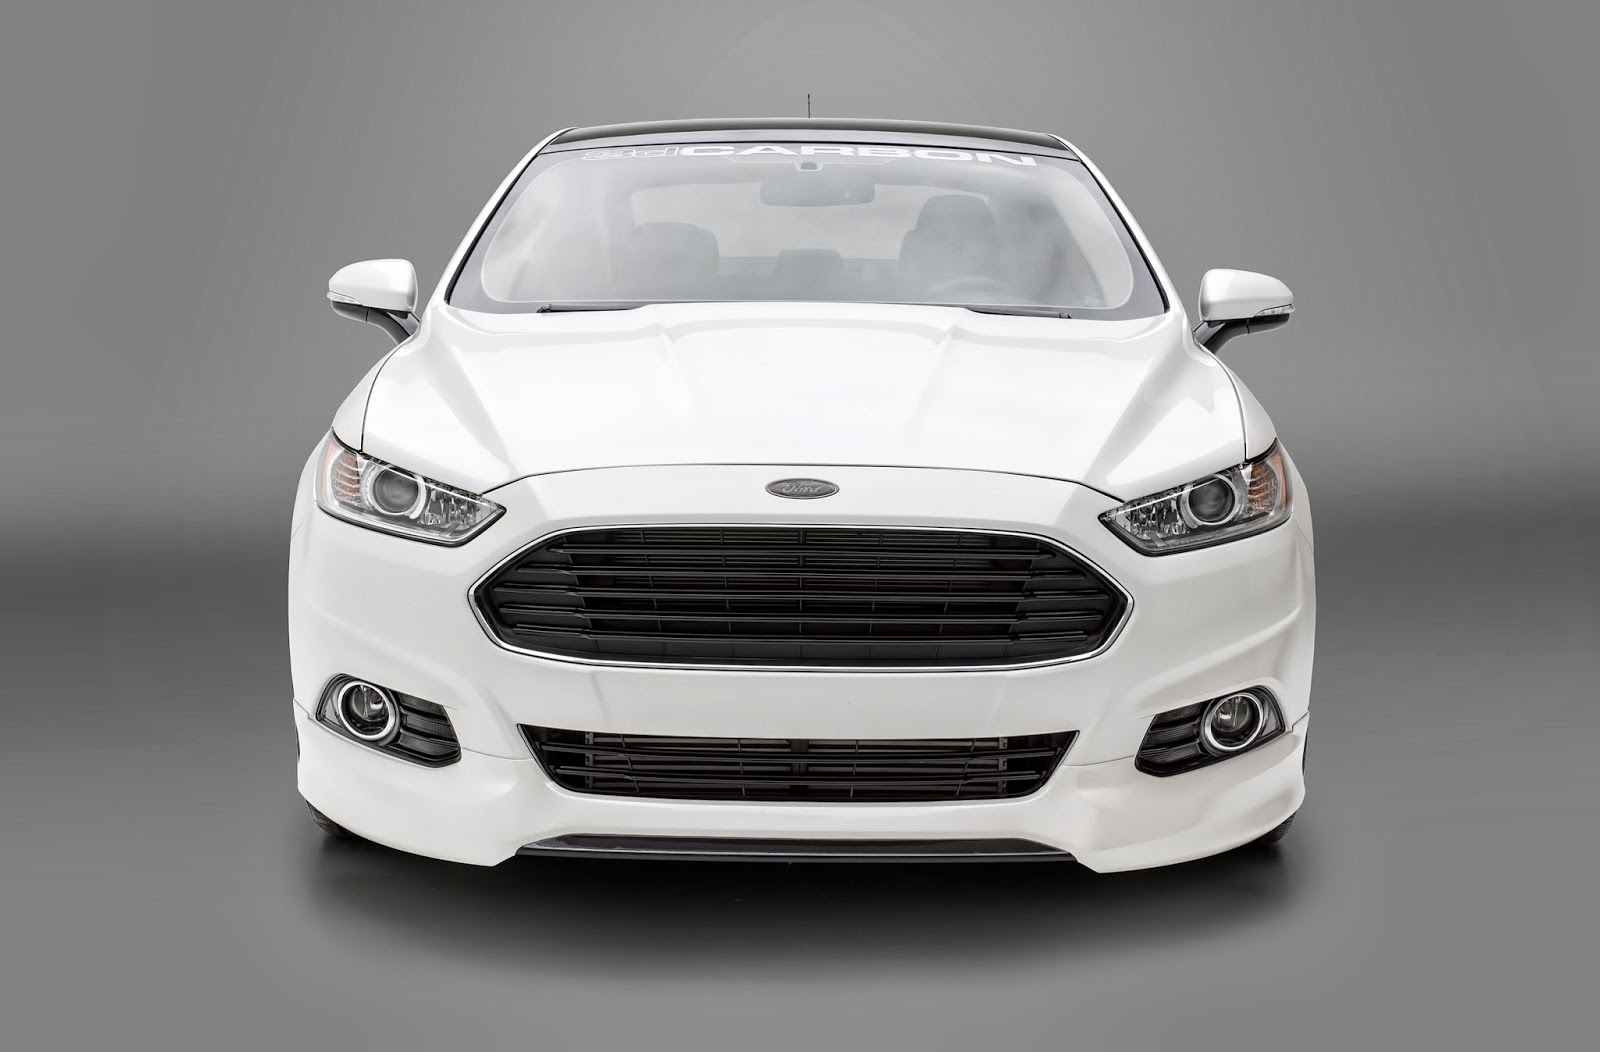 © Automotiveblogz: Ford Fusion: 3dCarbon Body Kit Photos